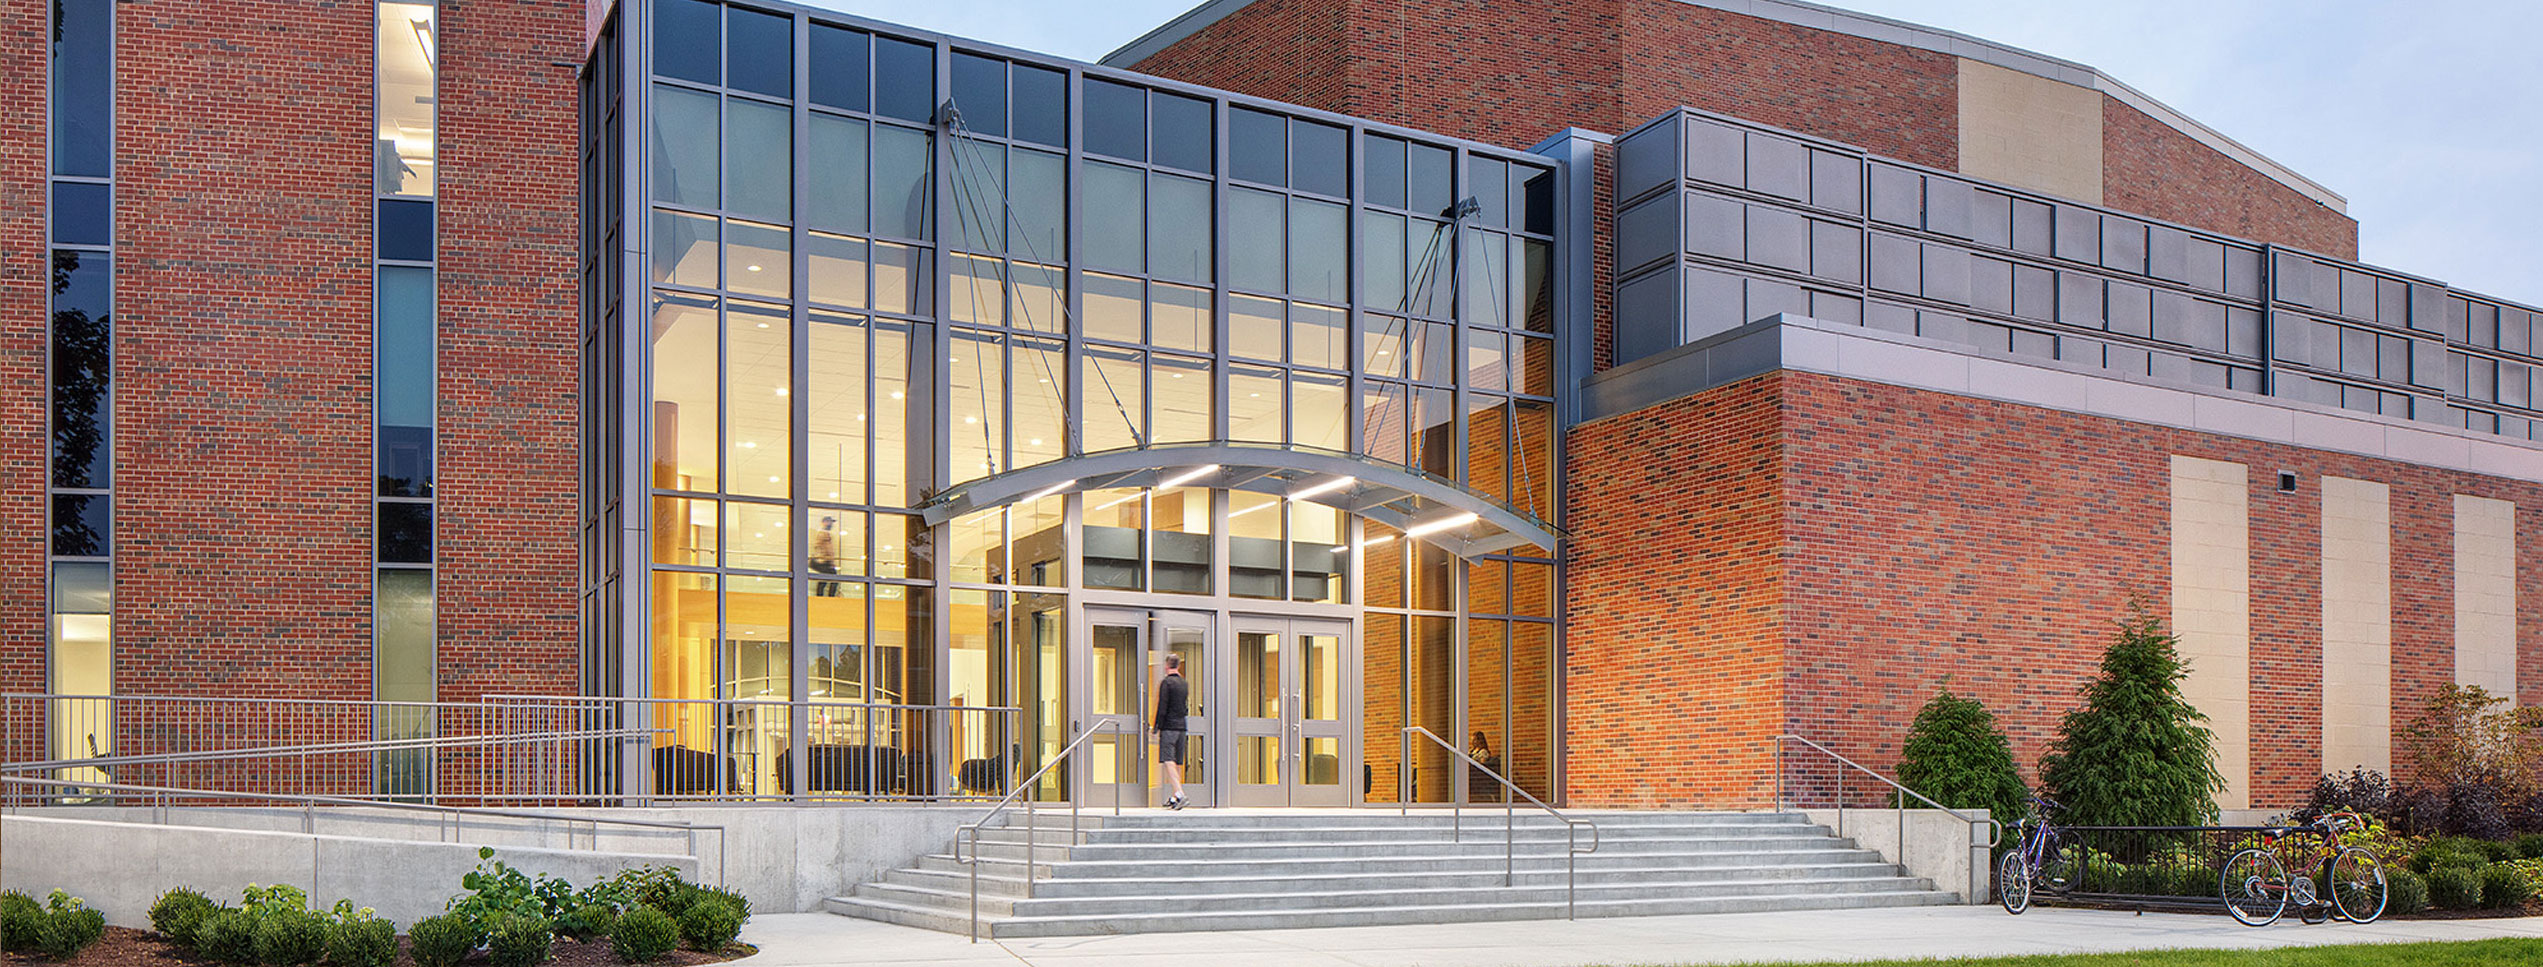 Wheaton College Performing Arts Center